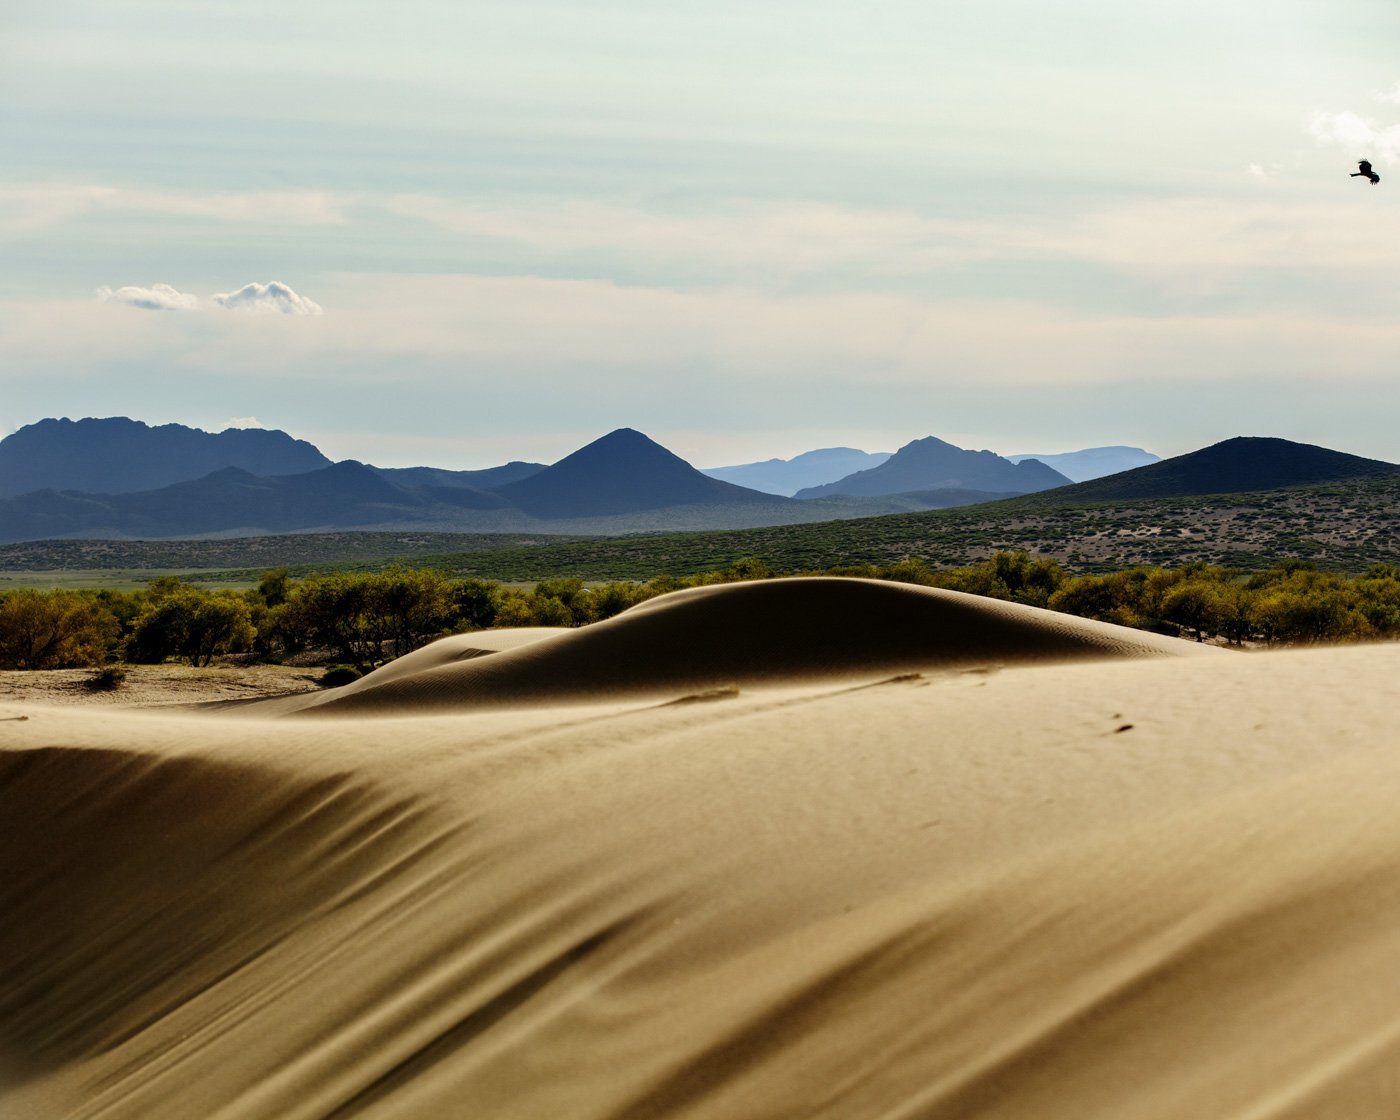 désert dunes mongoles